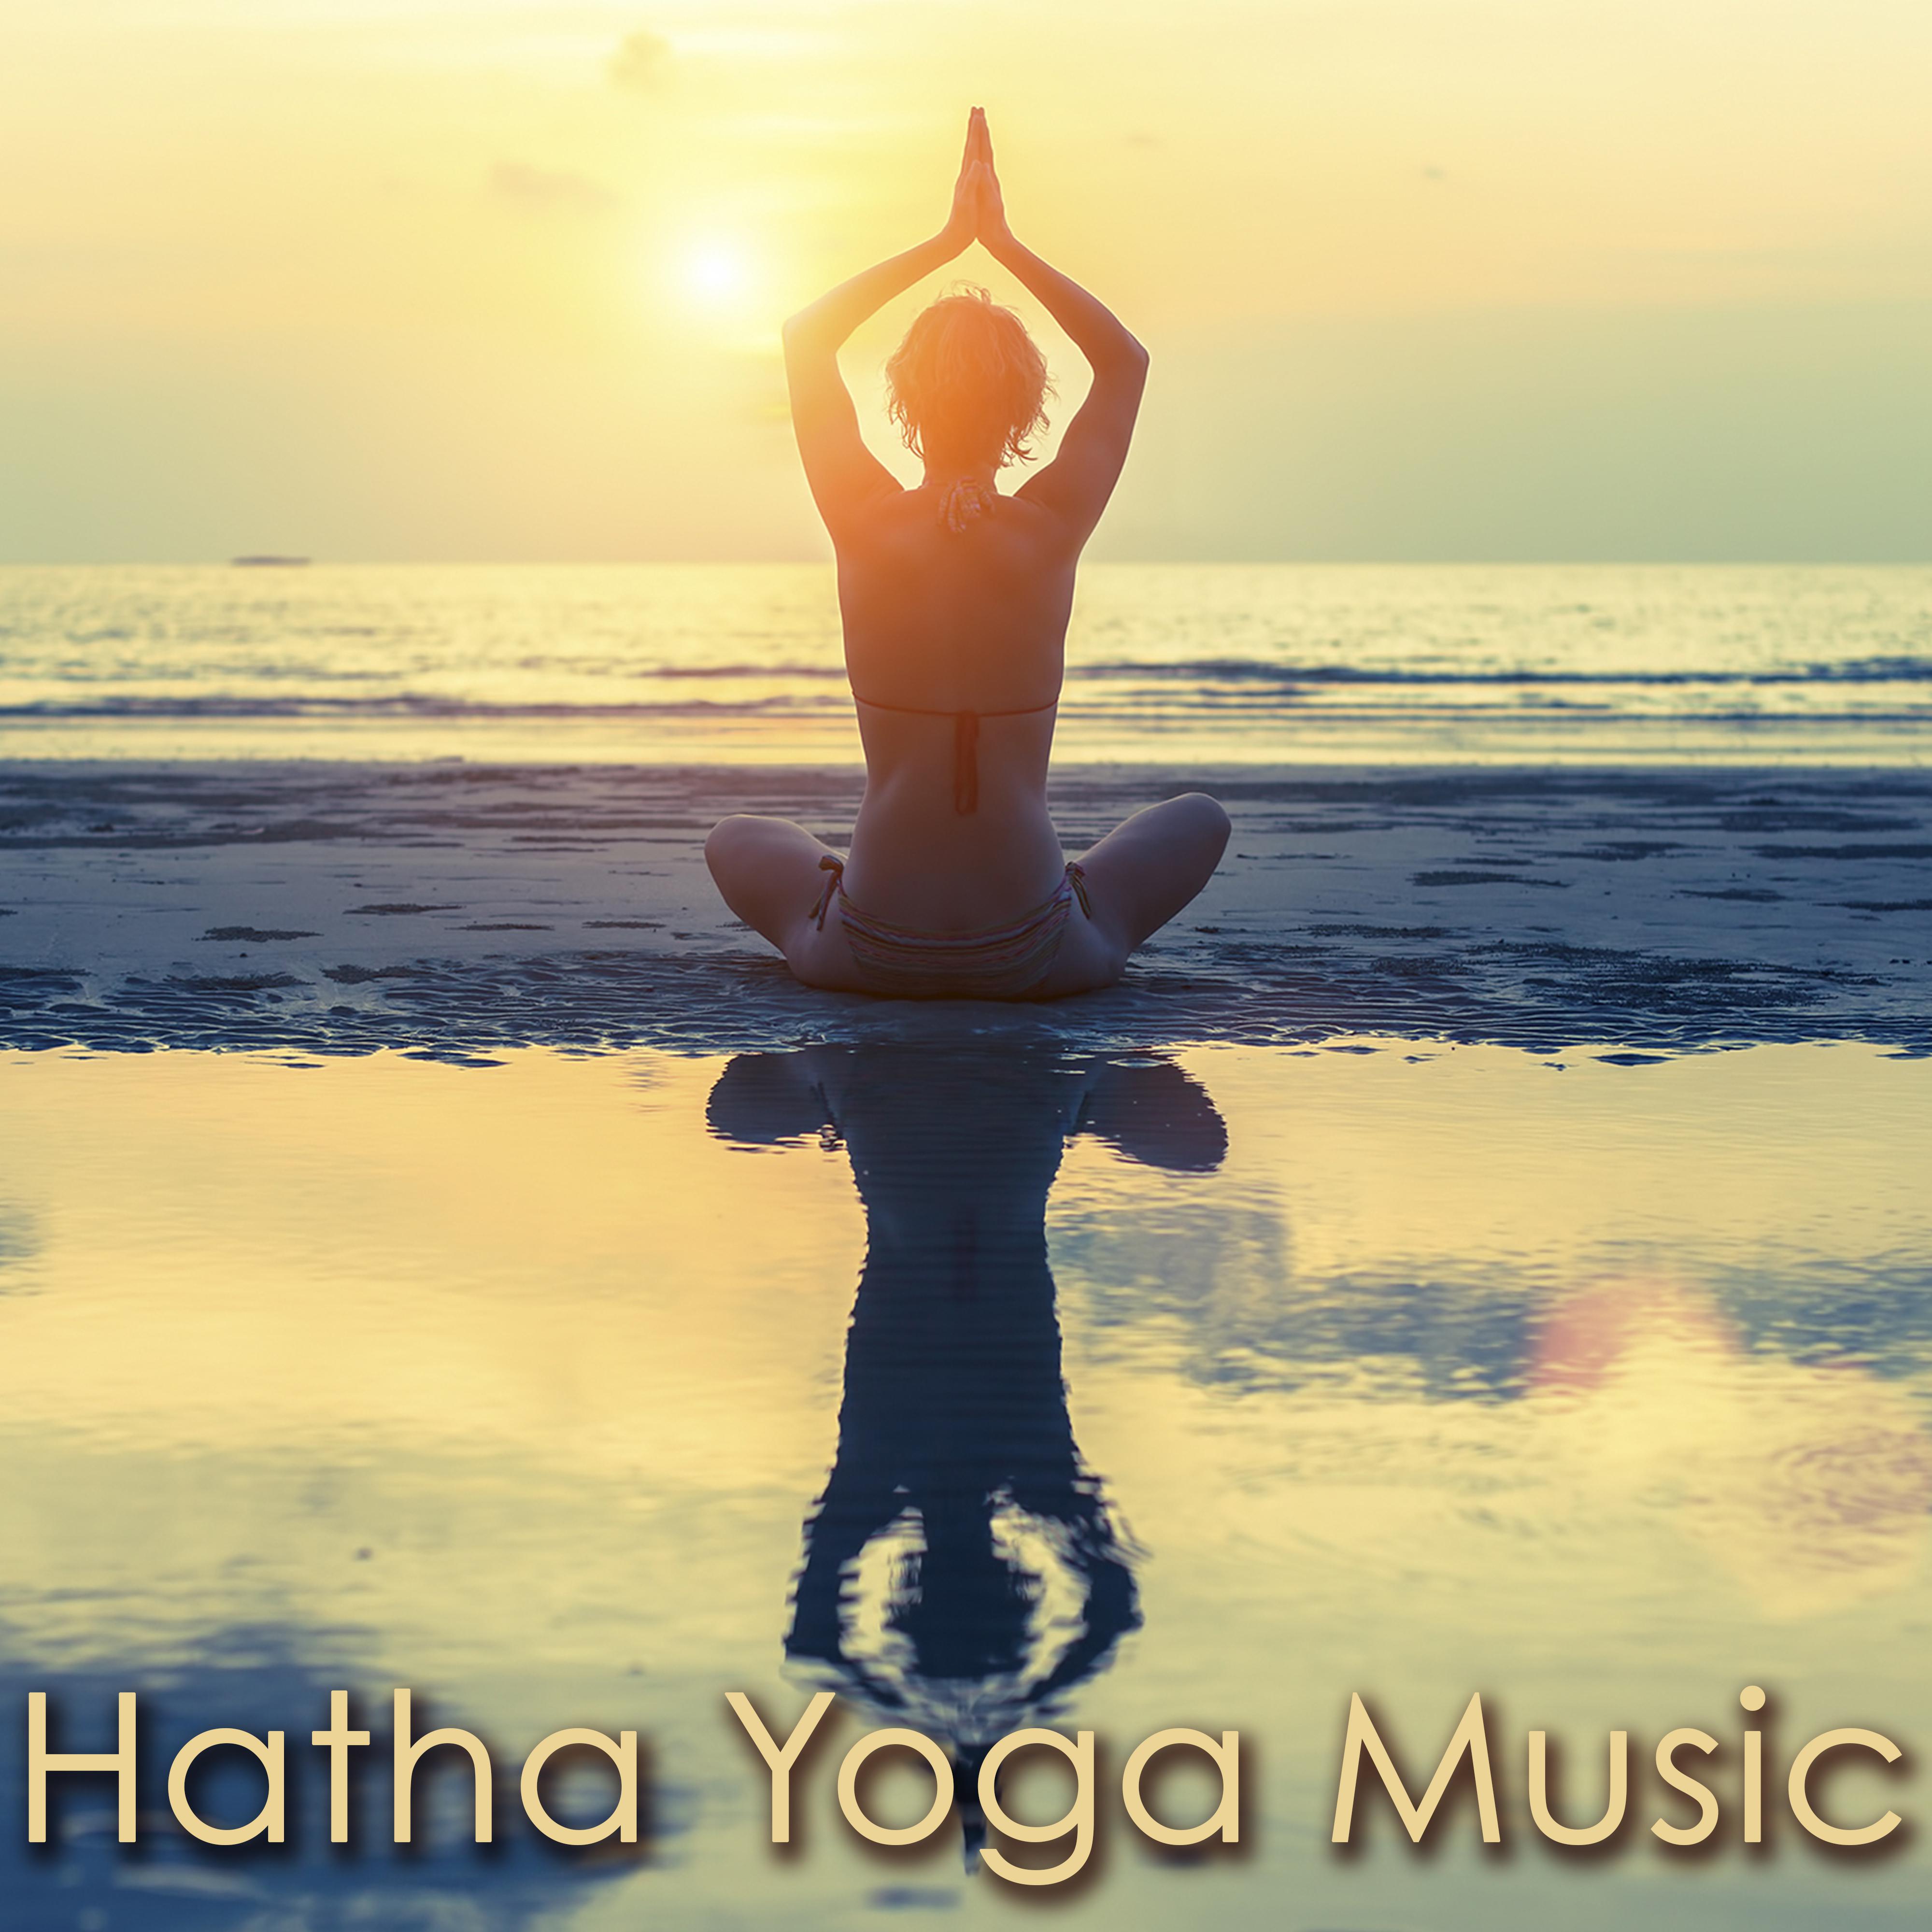 Hatha Yoga Music – Yoga Postures, Pranayama & Meditation Peaceful Songs for Your Yoga Zen Space